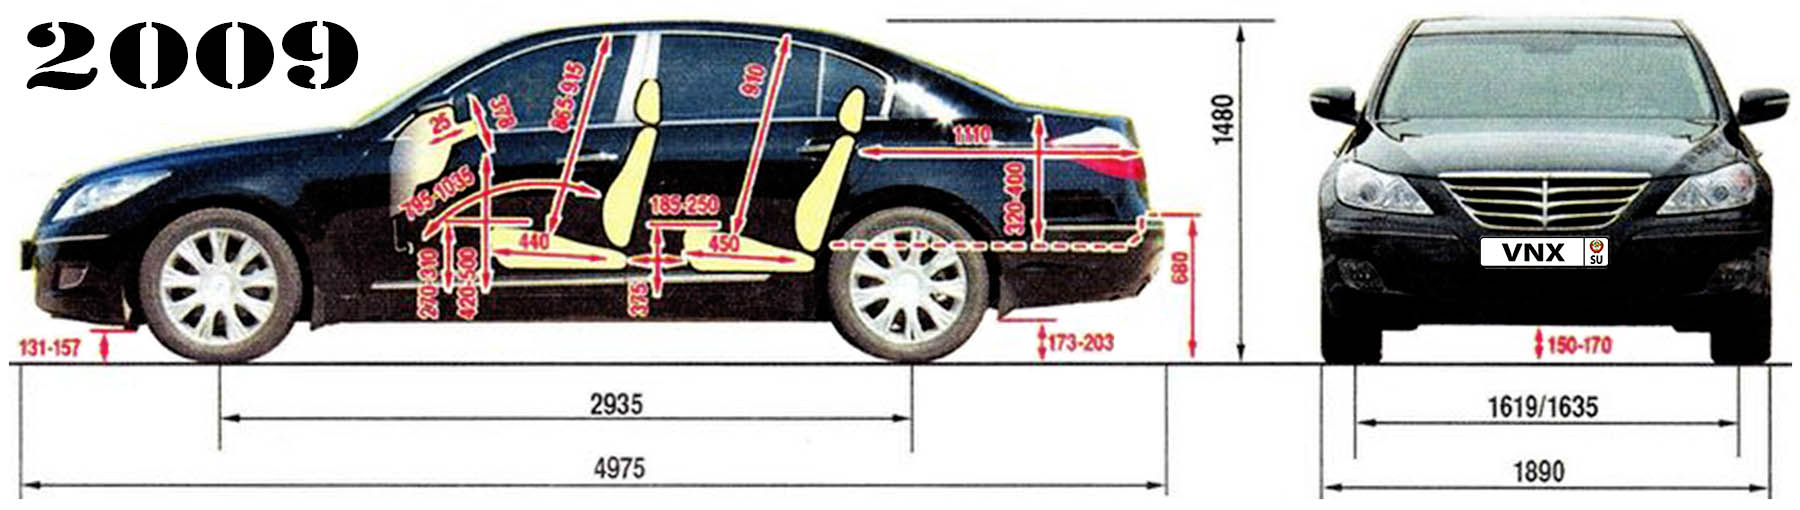 Габаритные размеры Хендэ Генезис BH (dimensions Hyundai Genesis mk1)